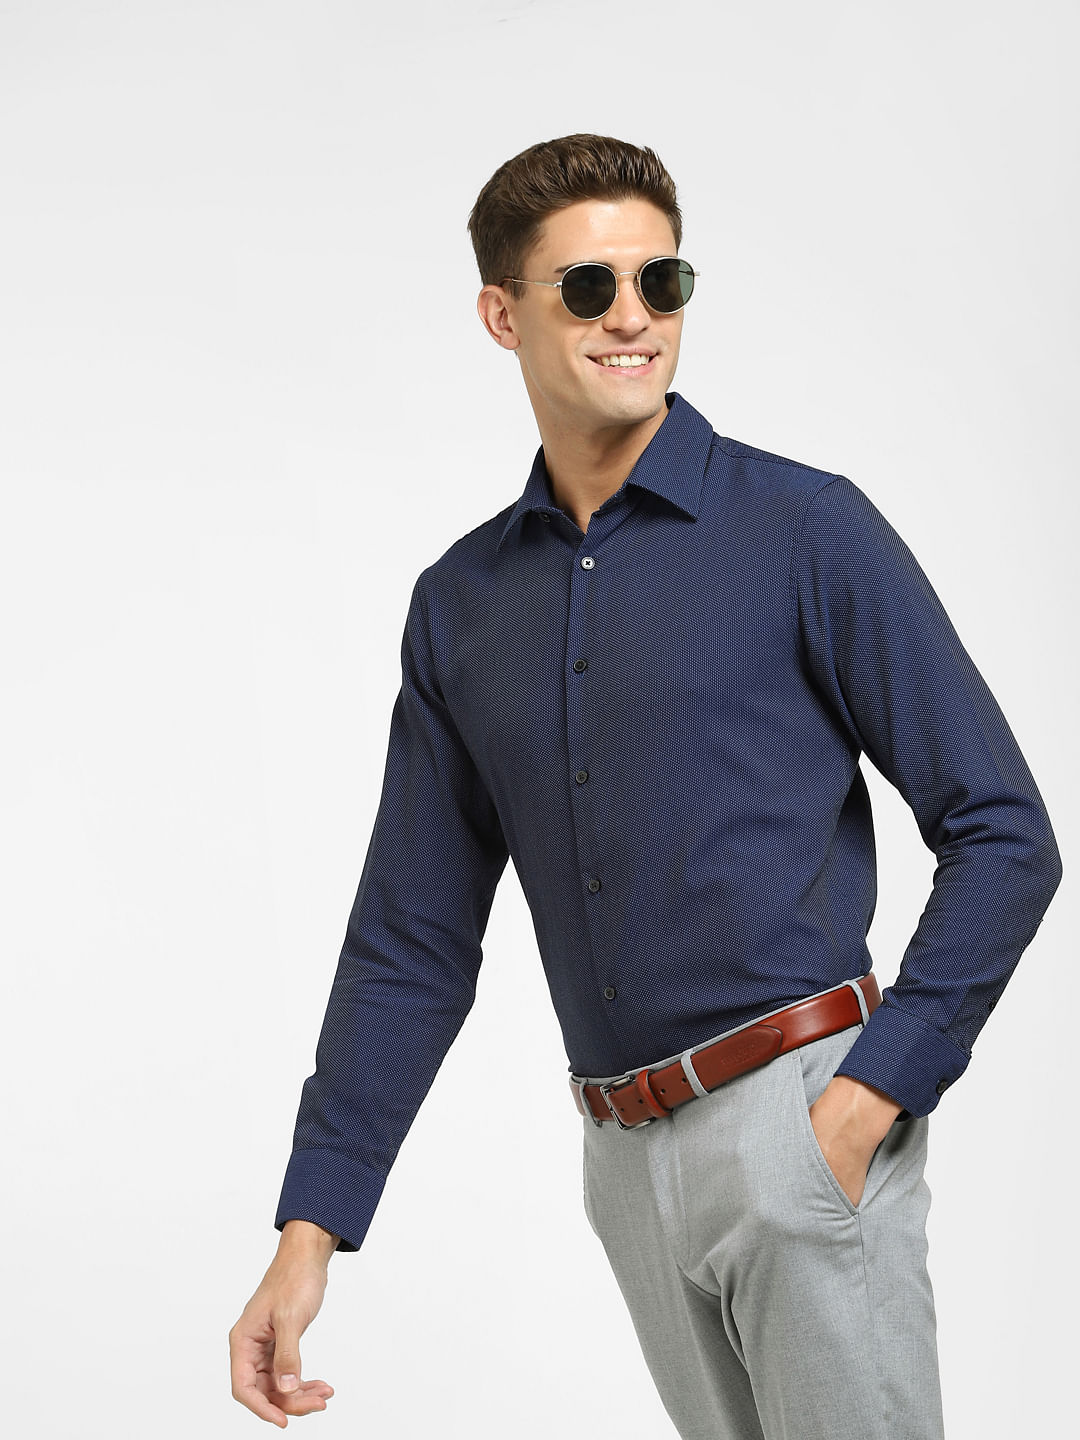 Shop Men's Sport Coats & Blazers | Premium Coats | Brooks Brothers